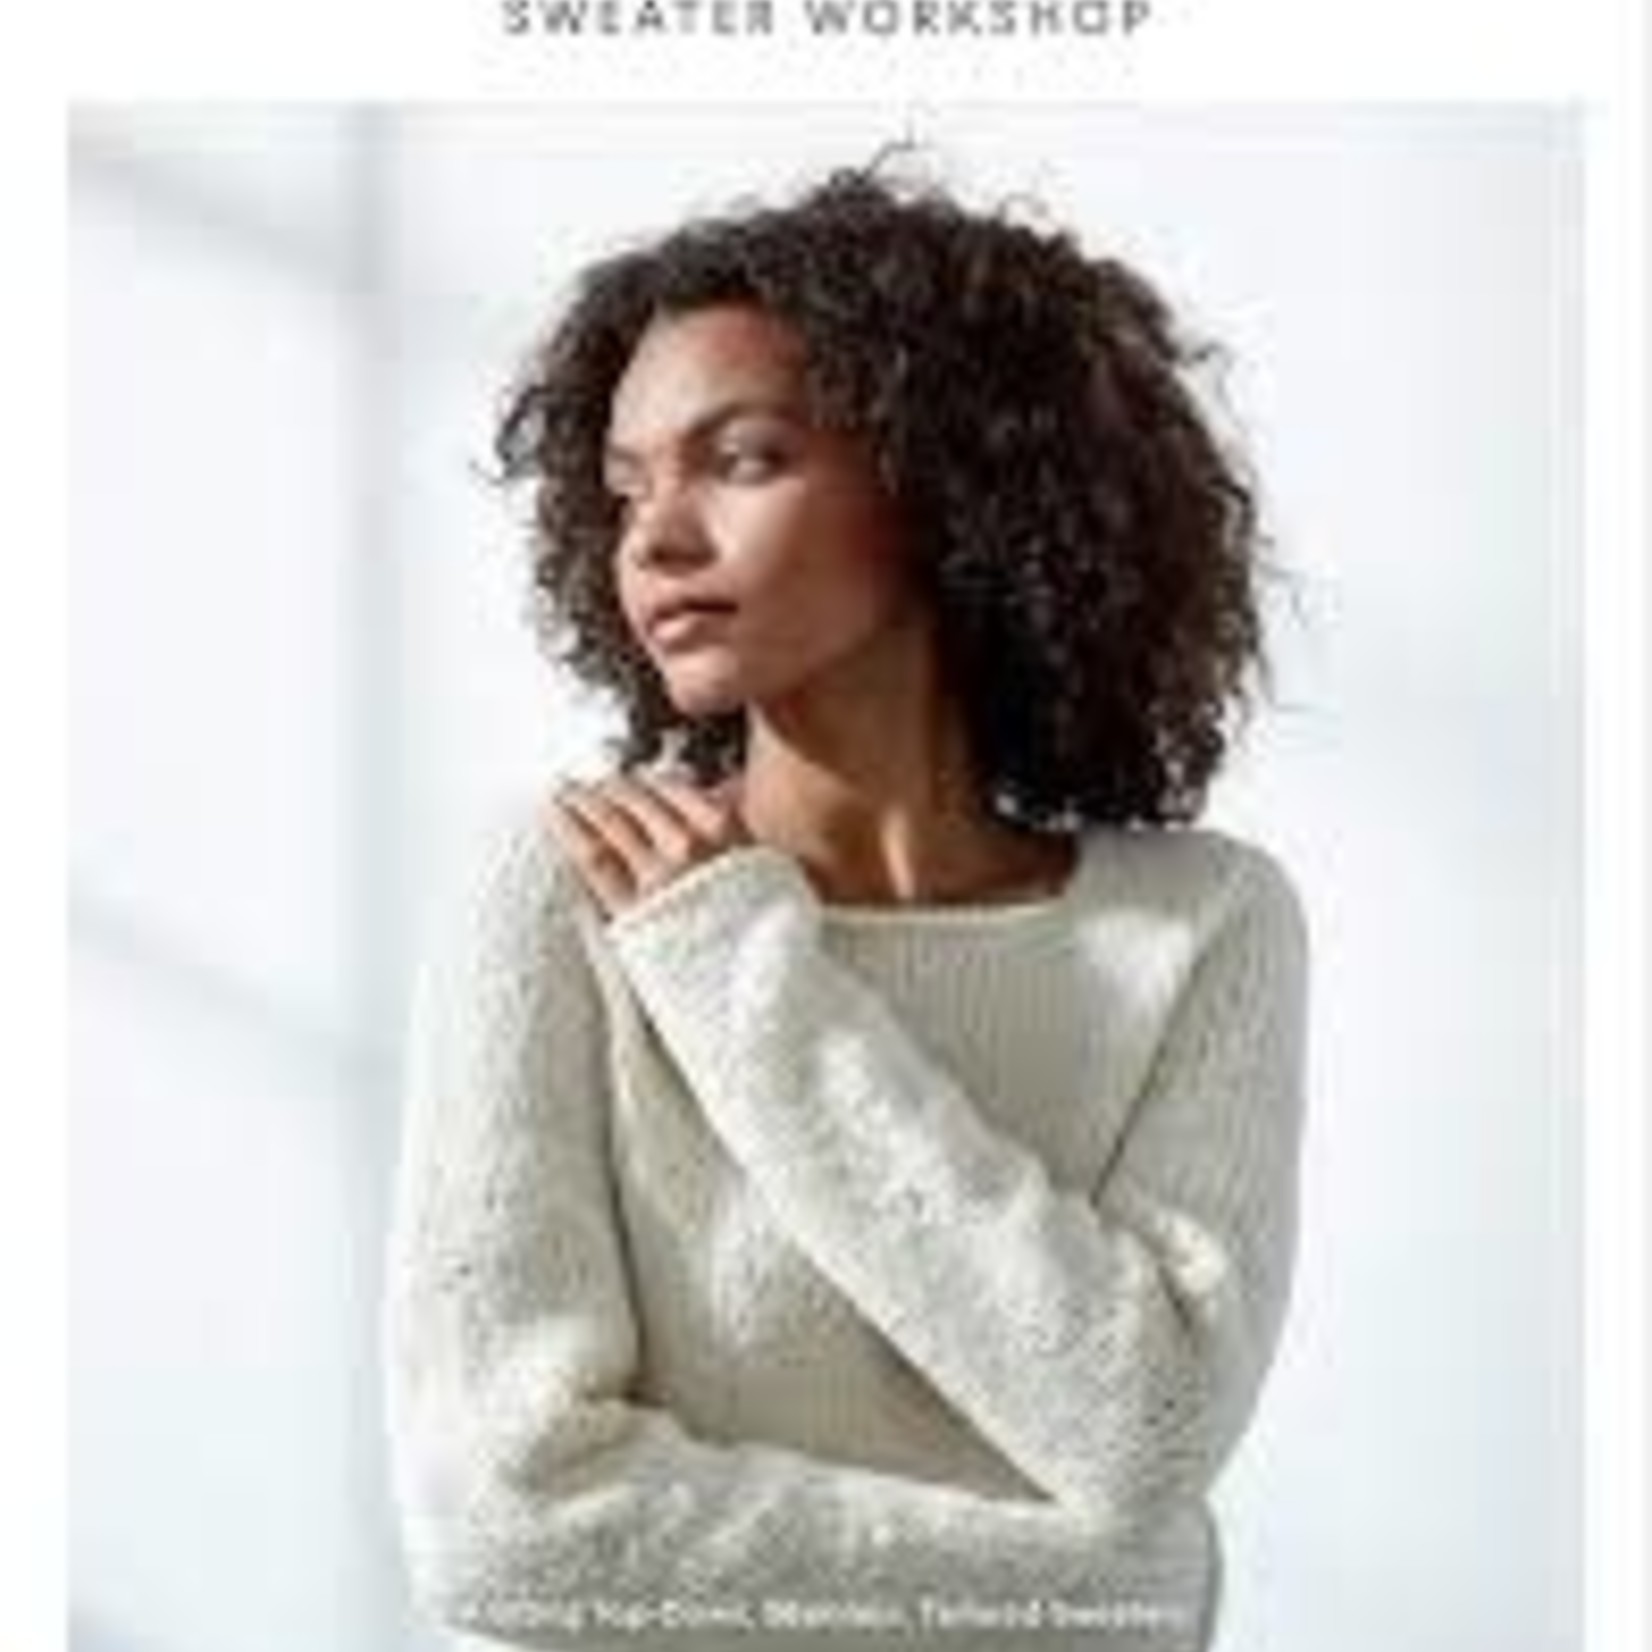 Book - Cocoknits Sweater Workshop by Julie Weisenberger